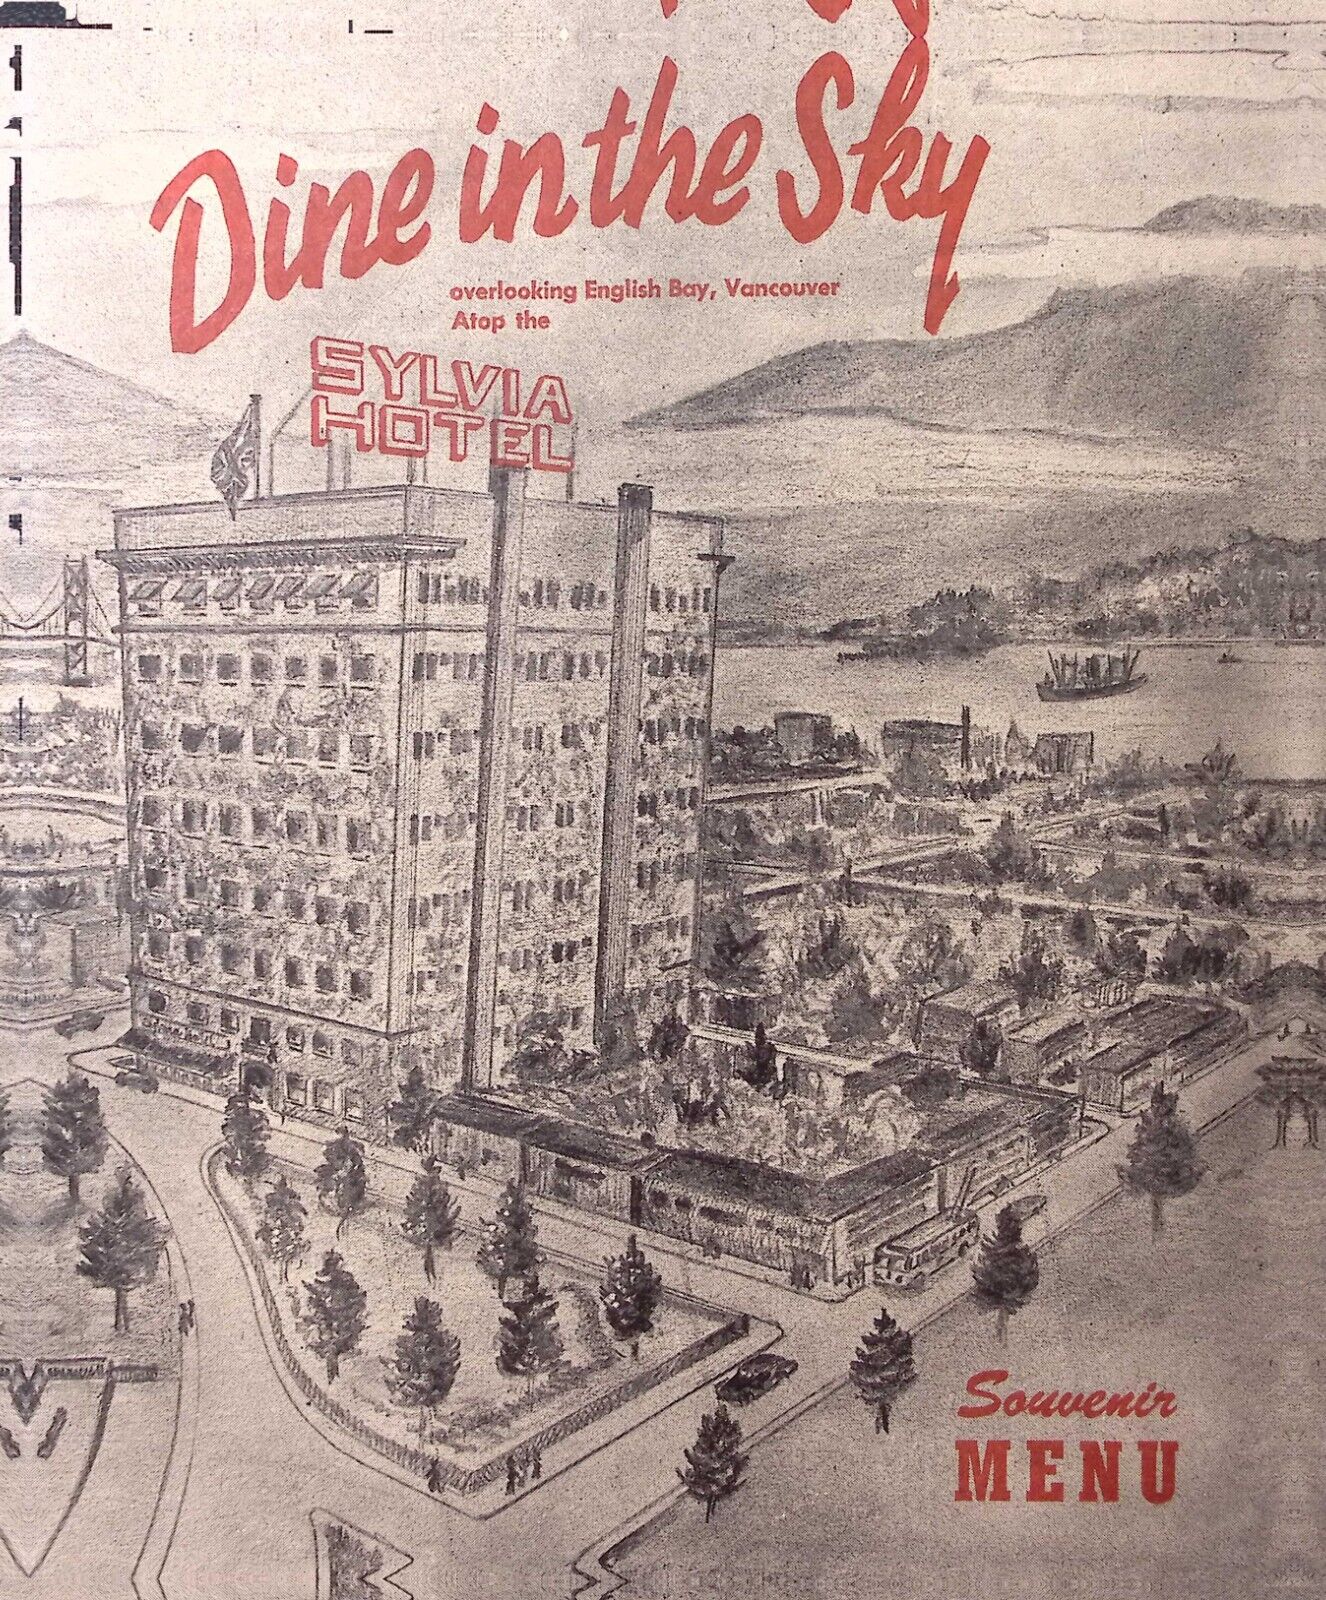 1940s SYLVIA HOTEL ENGLISH BAY VANCOUVER B.C SOUVENIR MENU DINE IN THE SKY Z2765